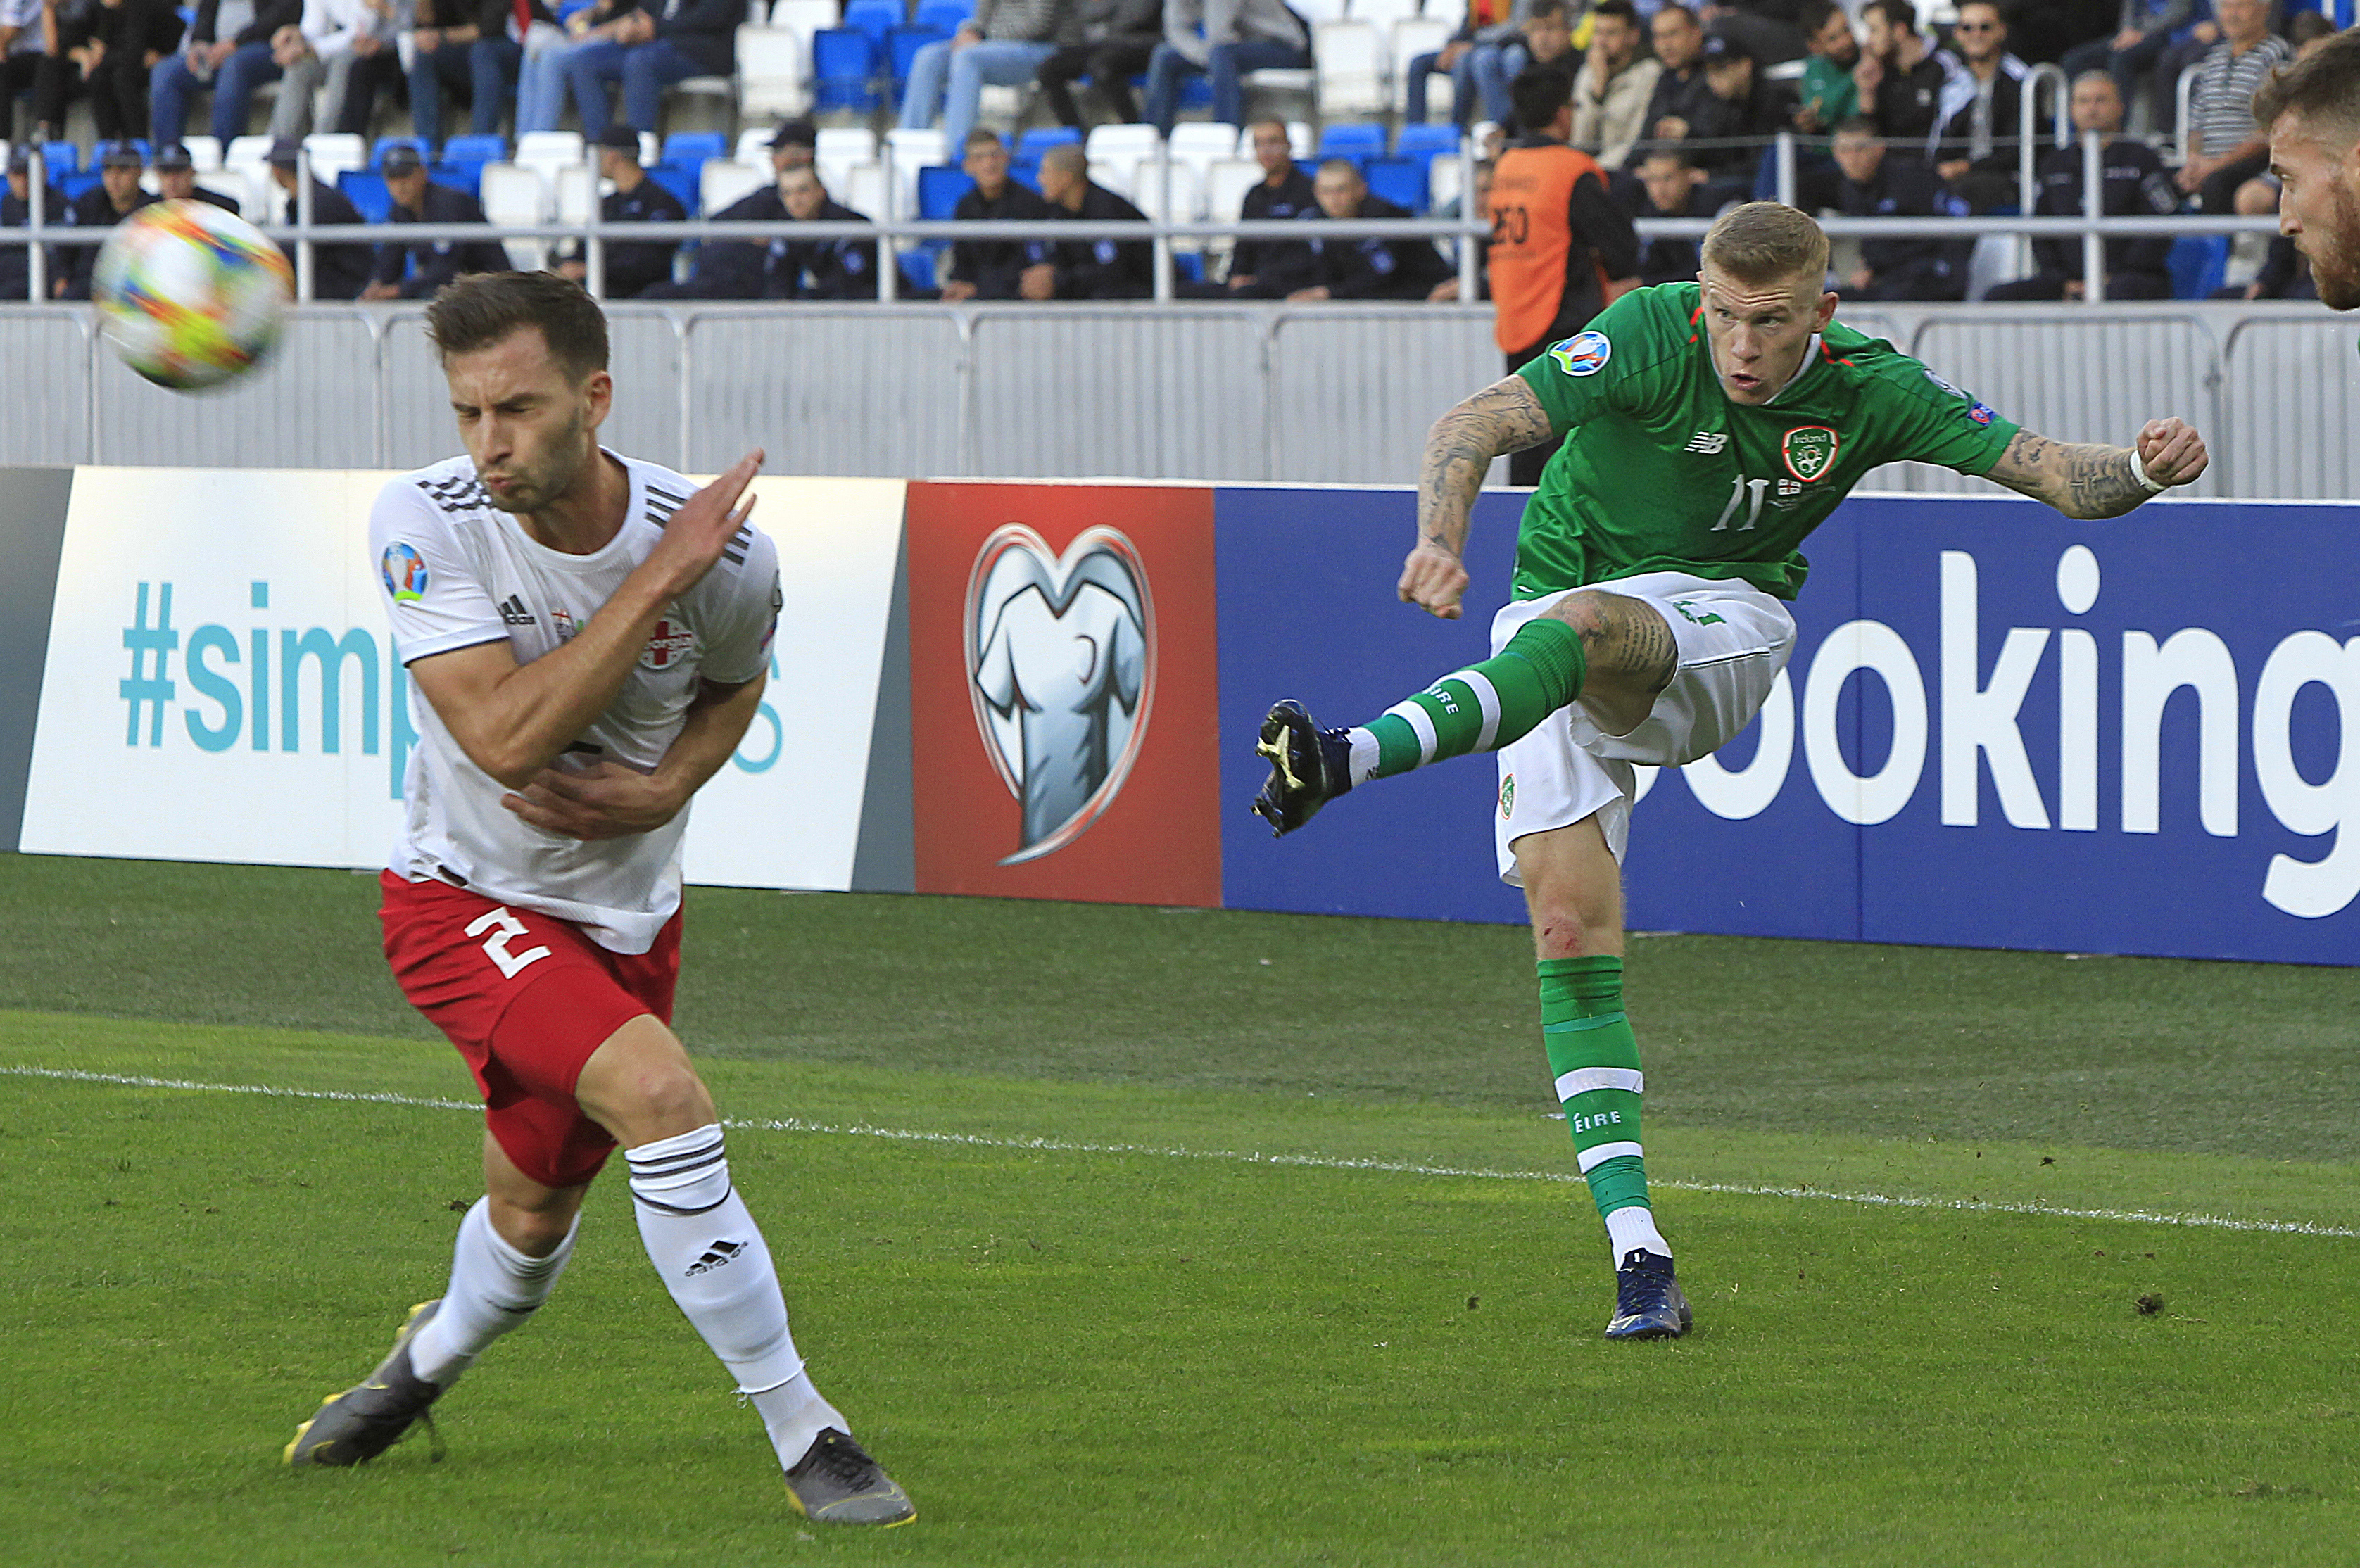 Írsky hráč James McClean vpravo kope do lopty v zápase D-skupiny Gruzínsko